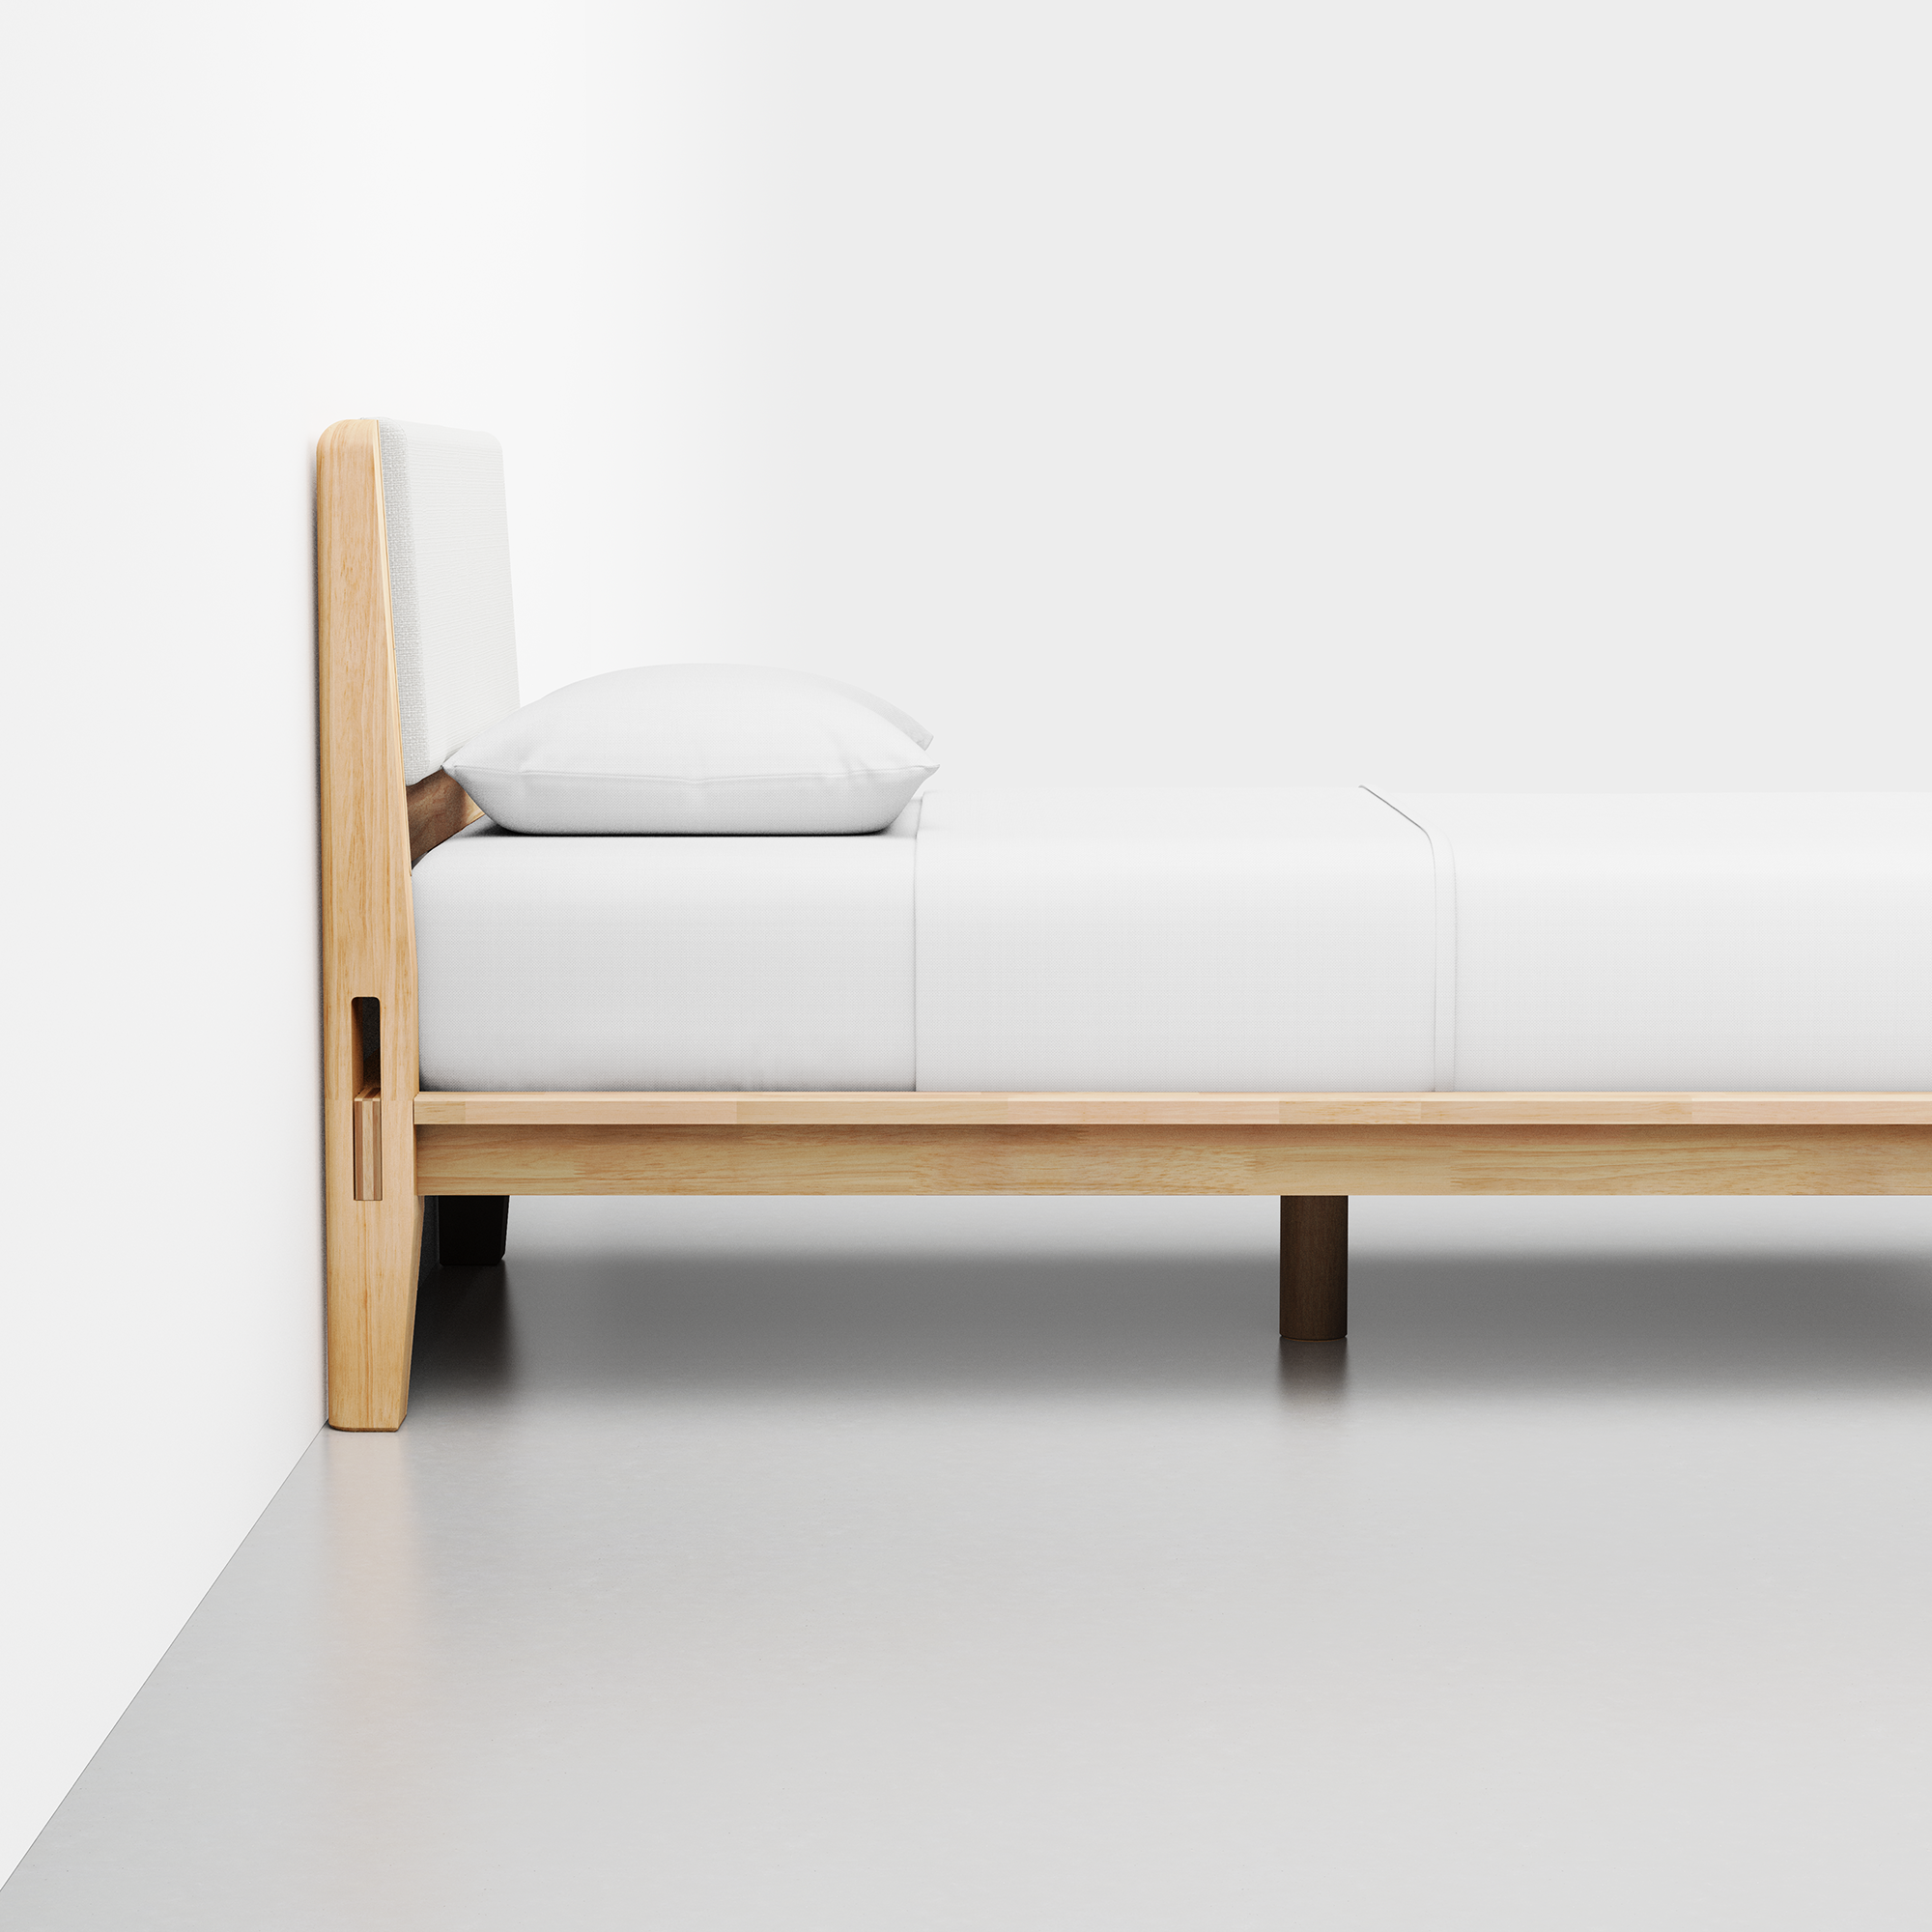 The Bed (Natural / HB Cushion Light Linen) - Render - Side